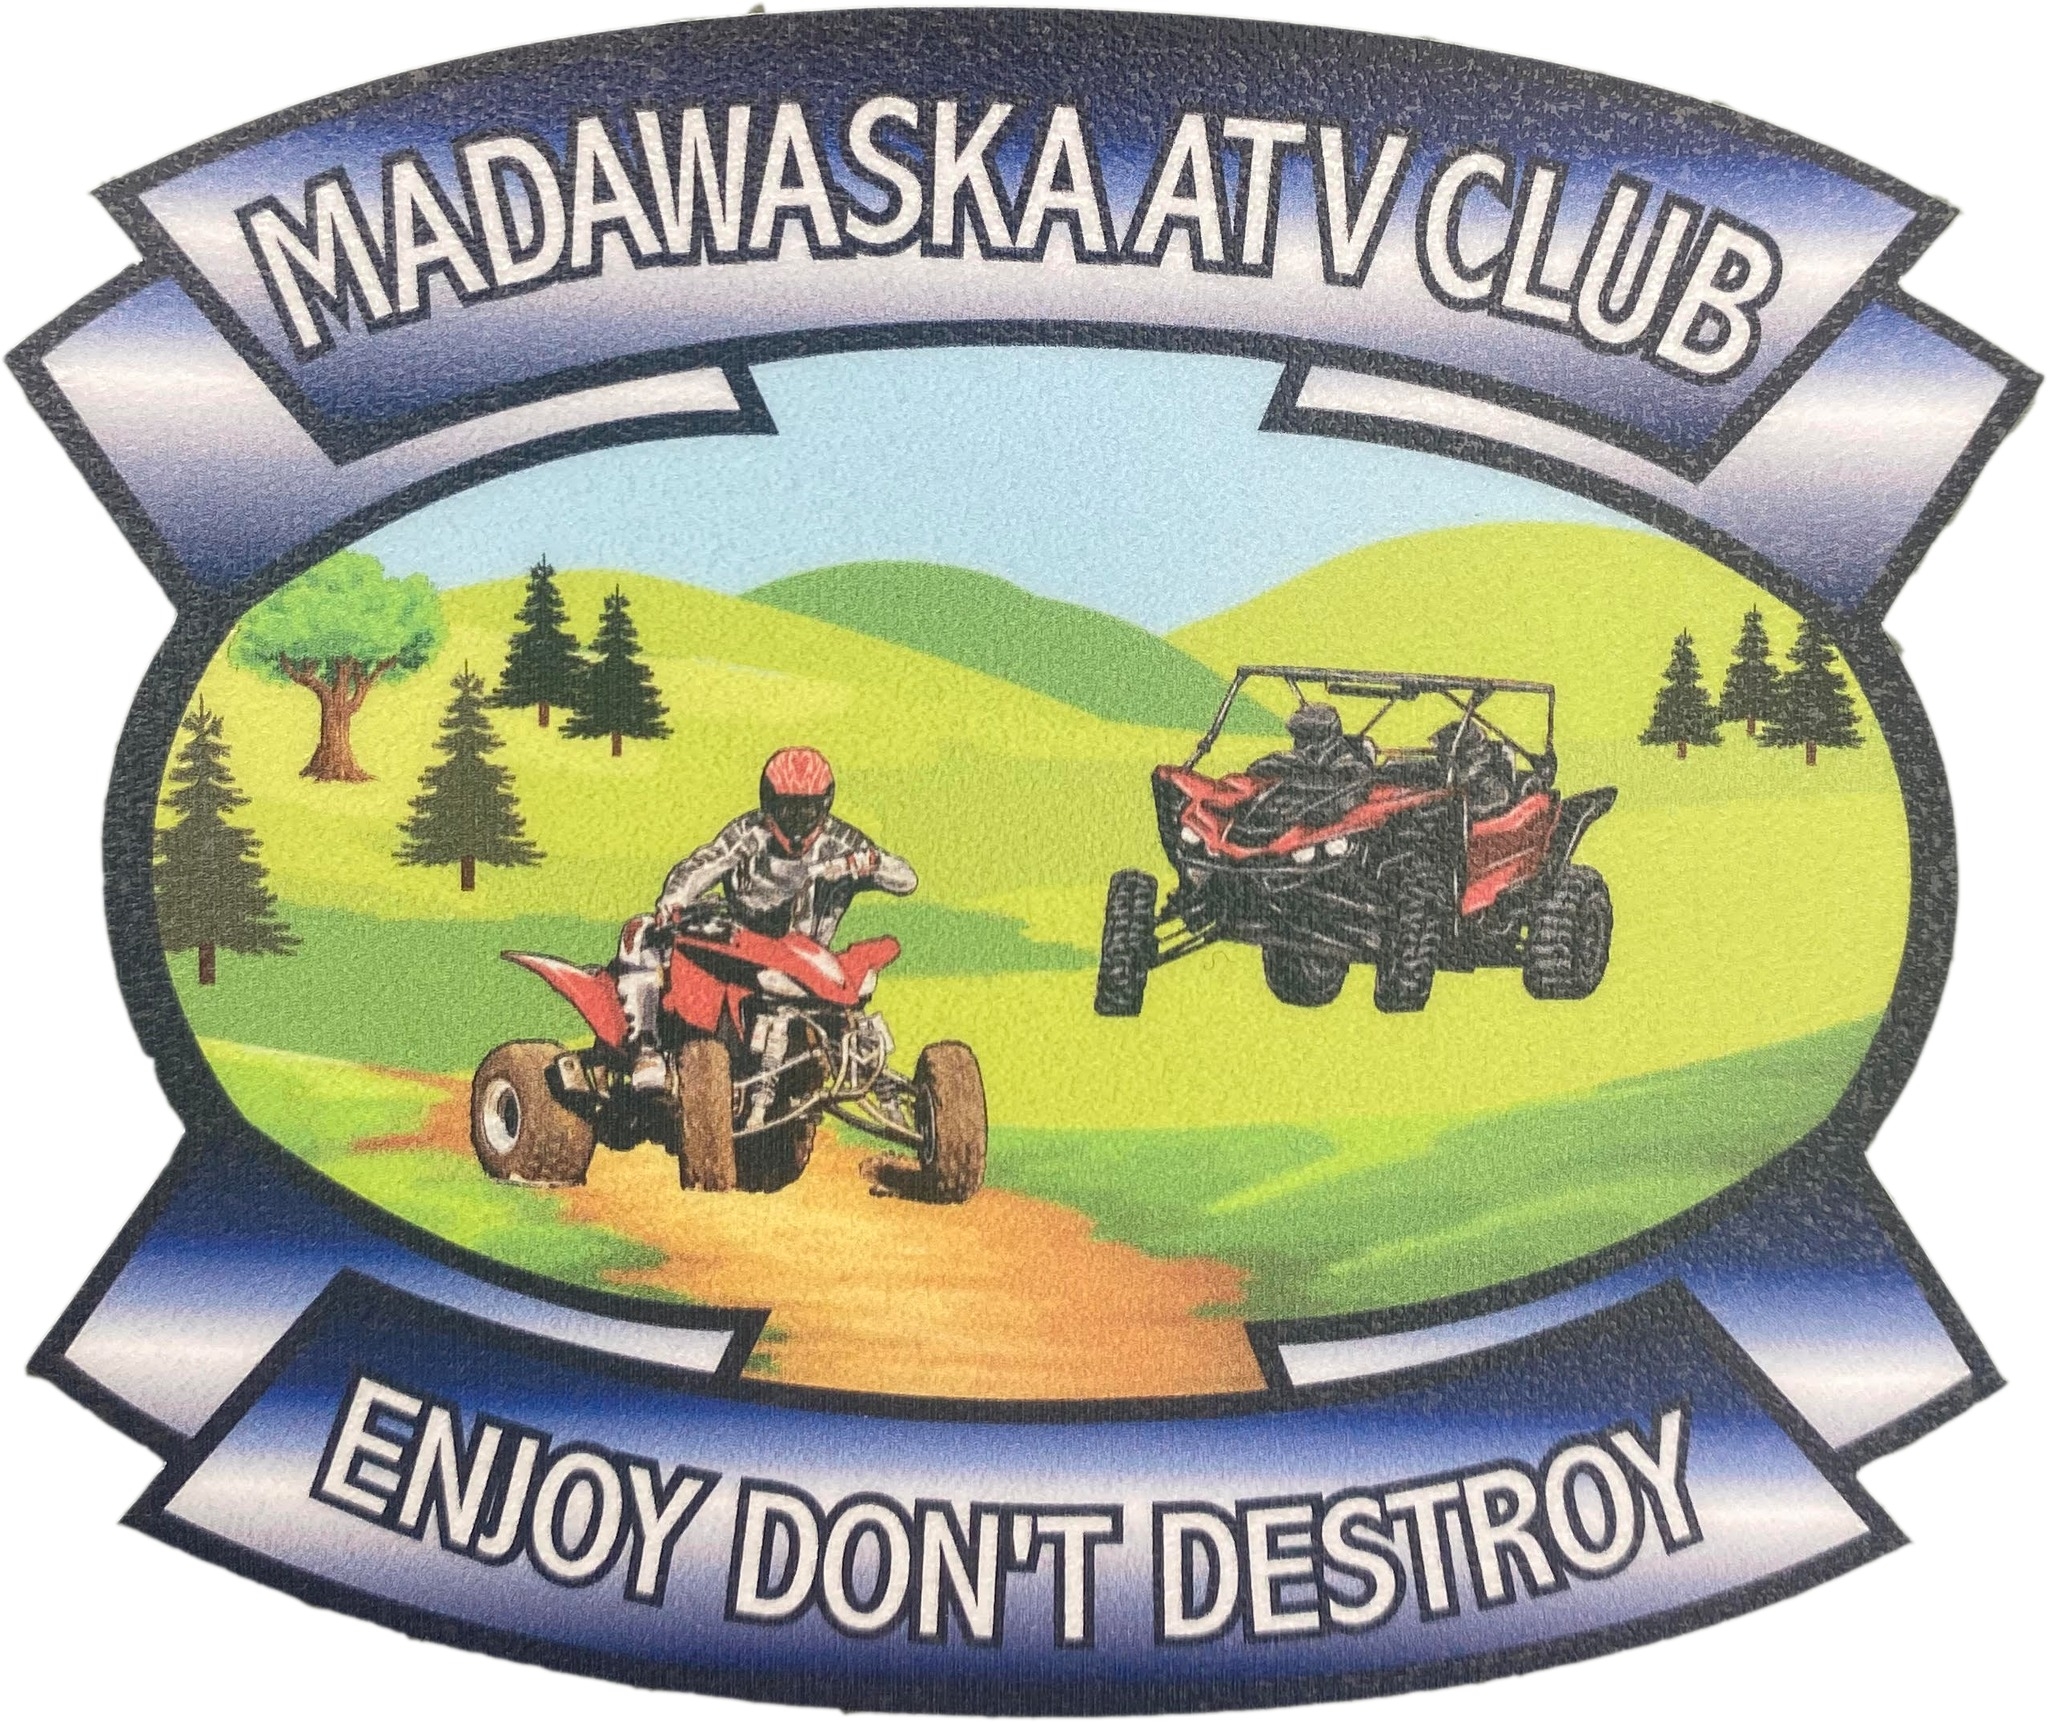 madawaska valley ATV club logo